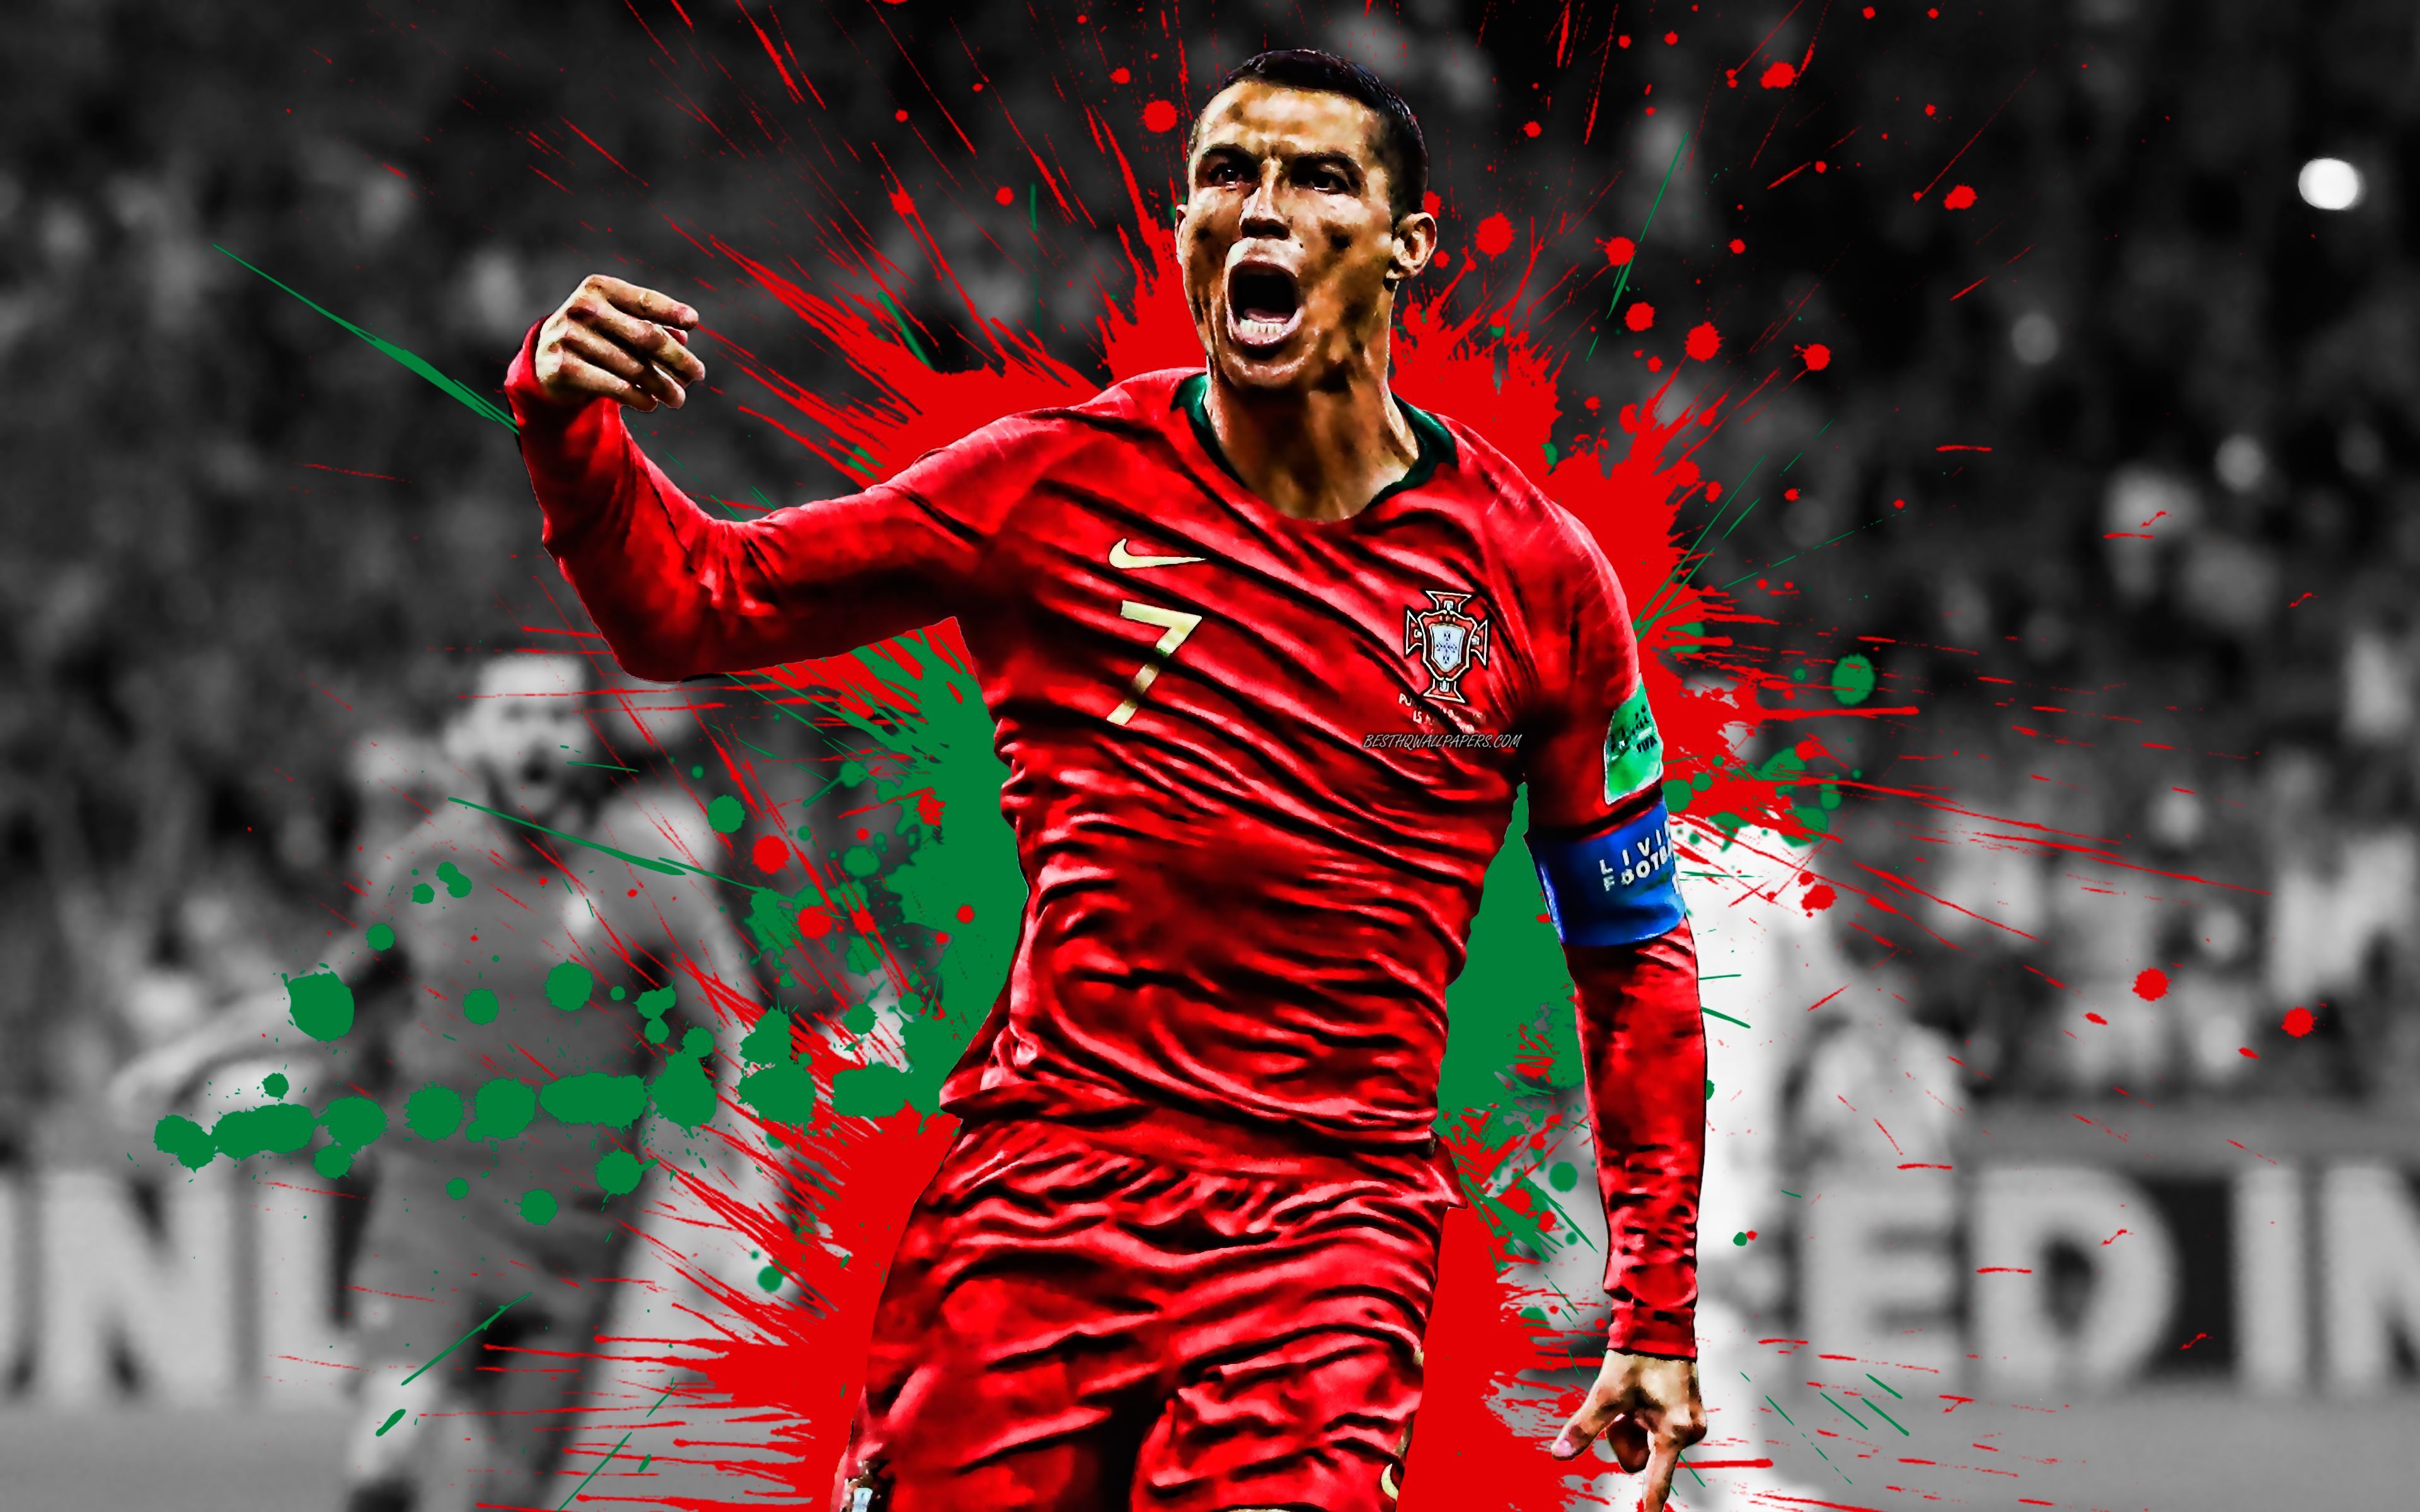 Ronaldo Hd Ultra 4k Wallpapers Wallpaper Cave